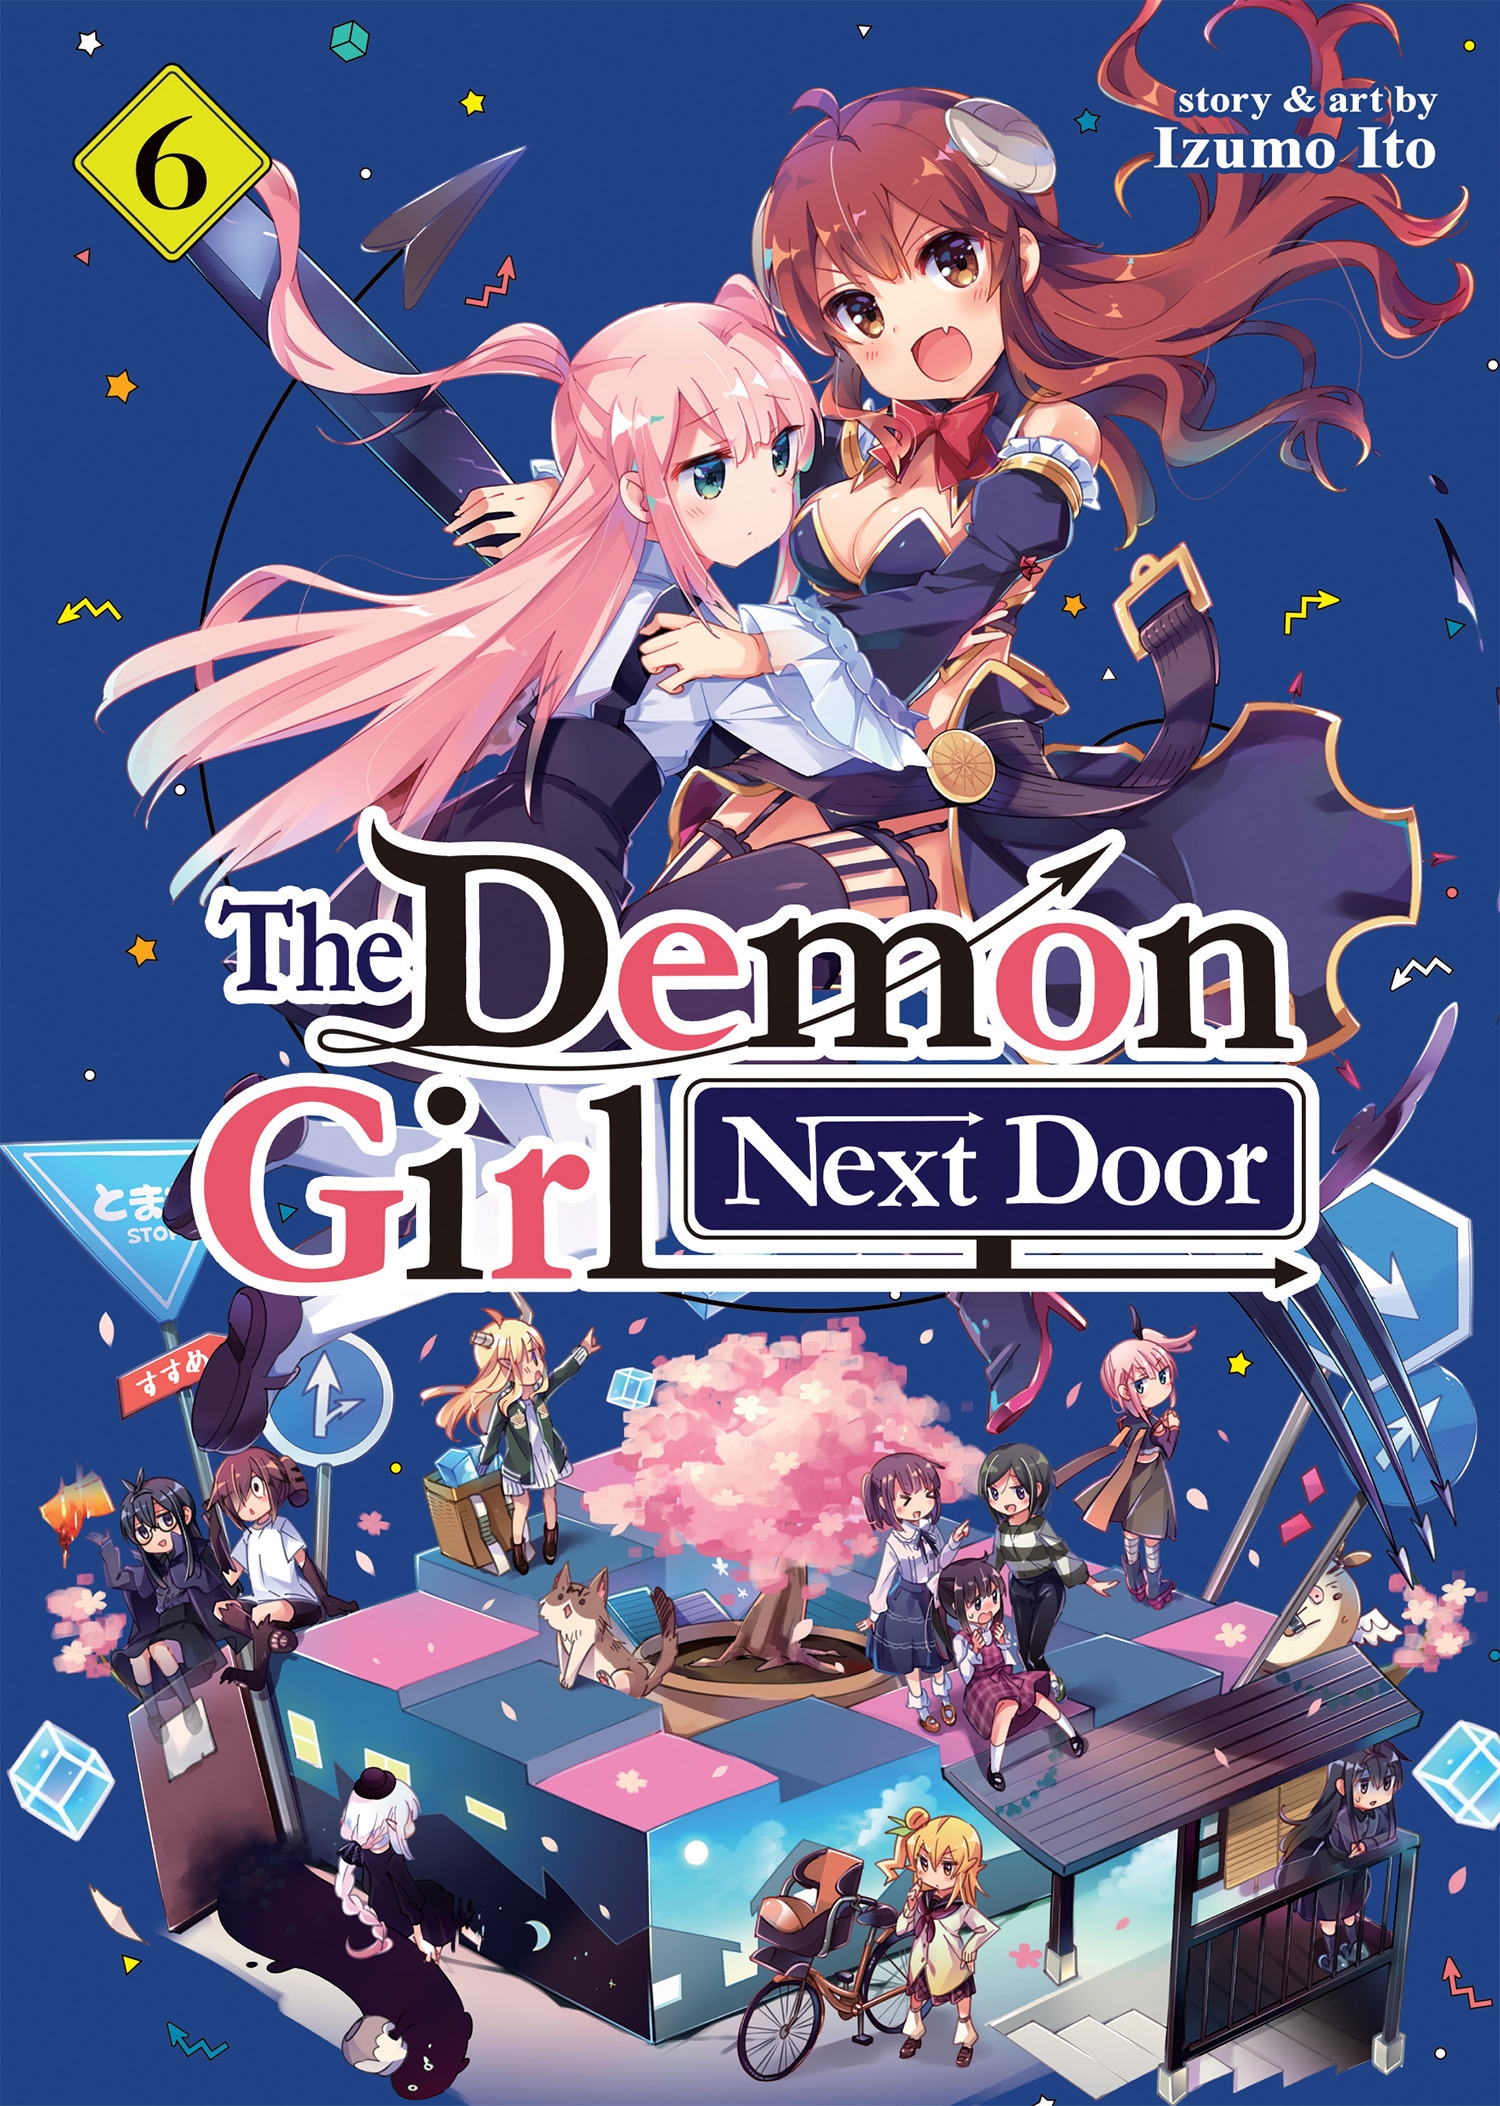 The Demon Girl Next Door Vol 6 By Izumo Ito Penguin Books New Zealand